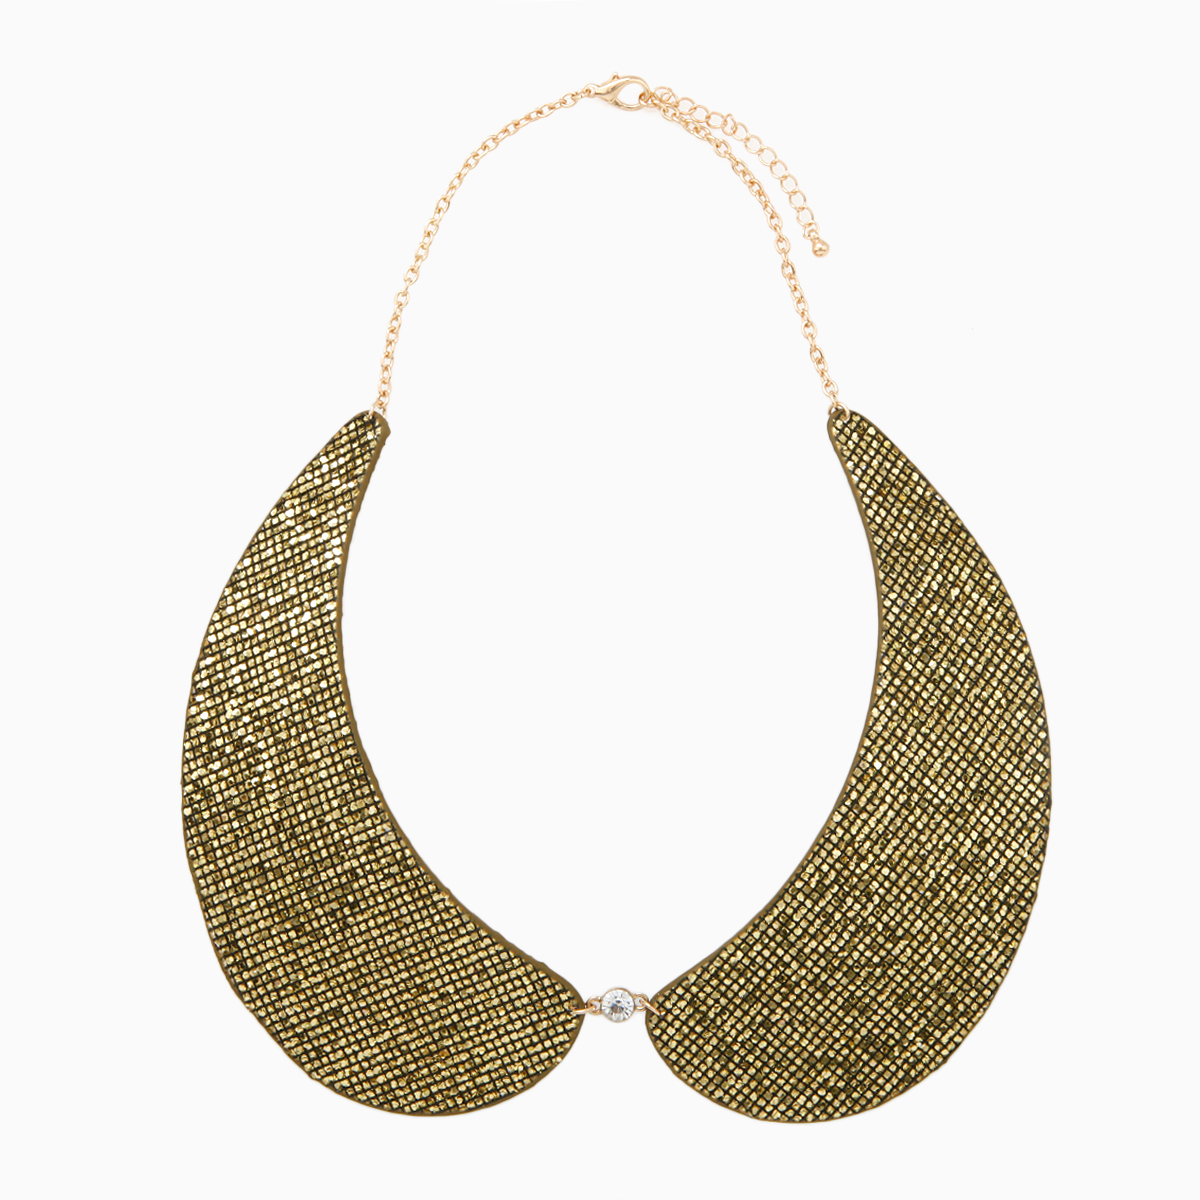 Rhinestone Collar Necklace in Gold | DAILYLOOK